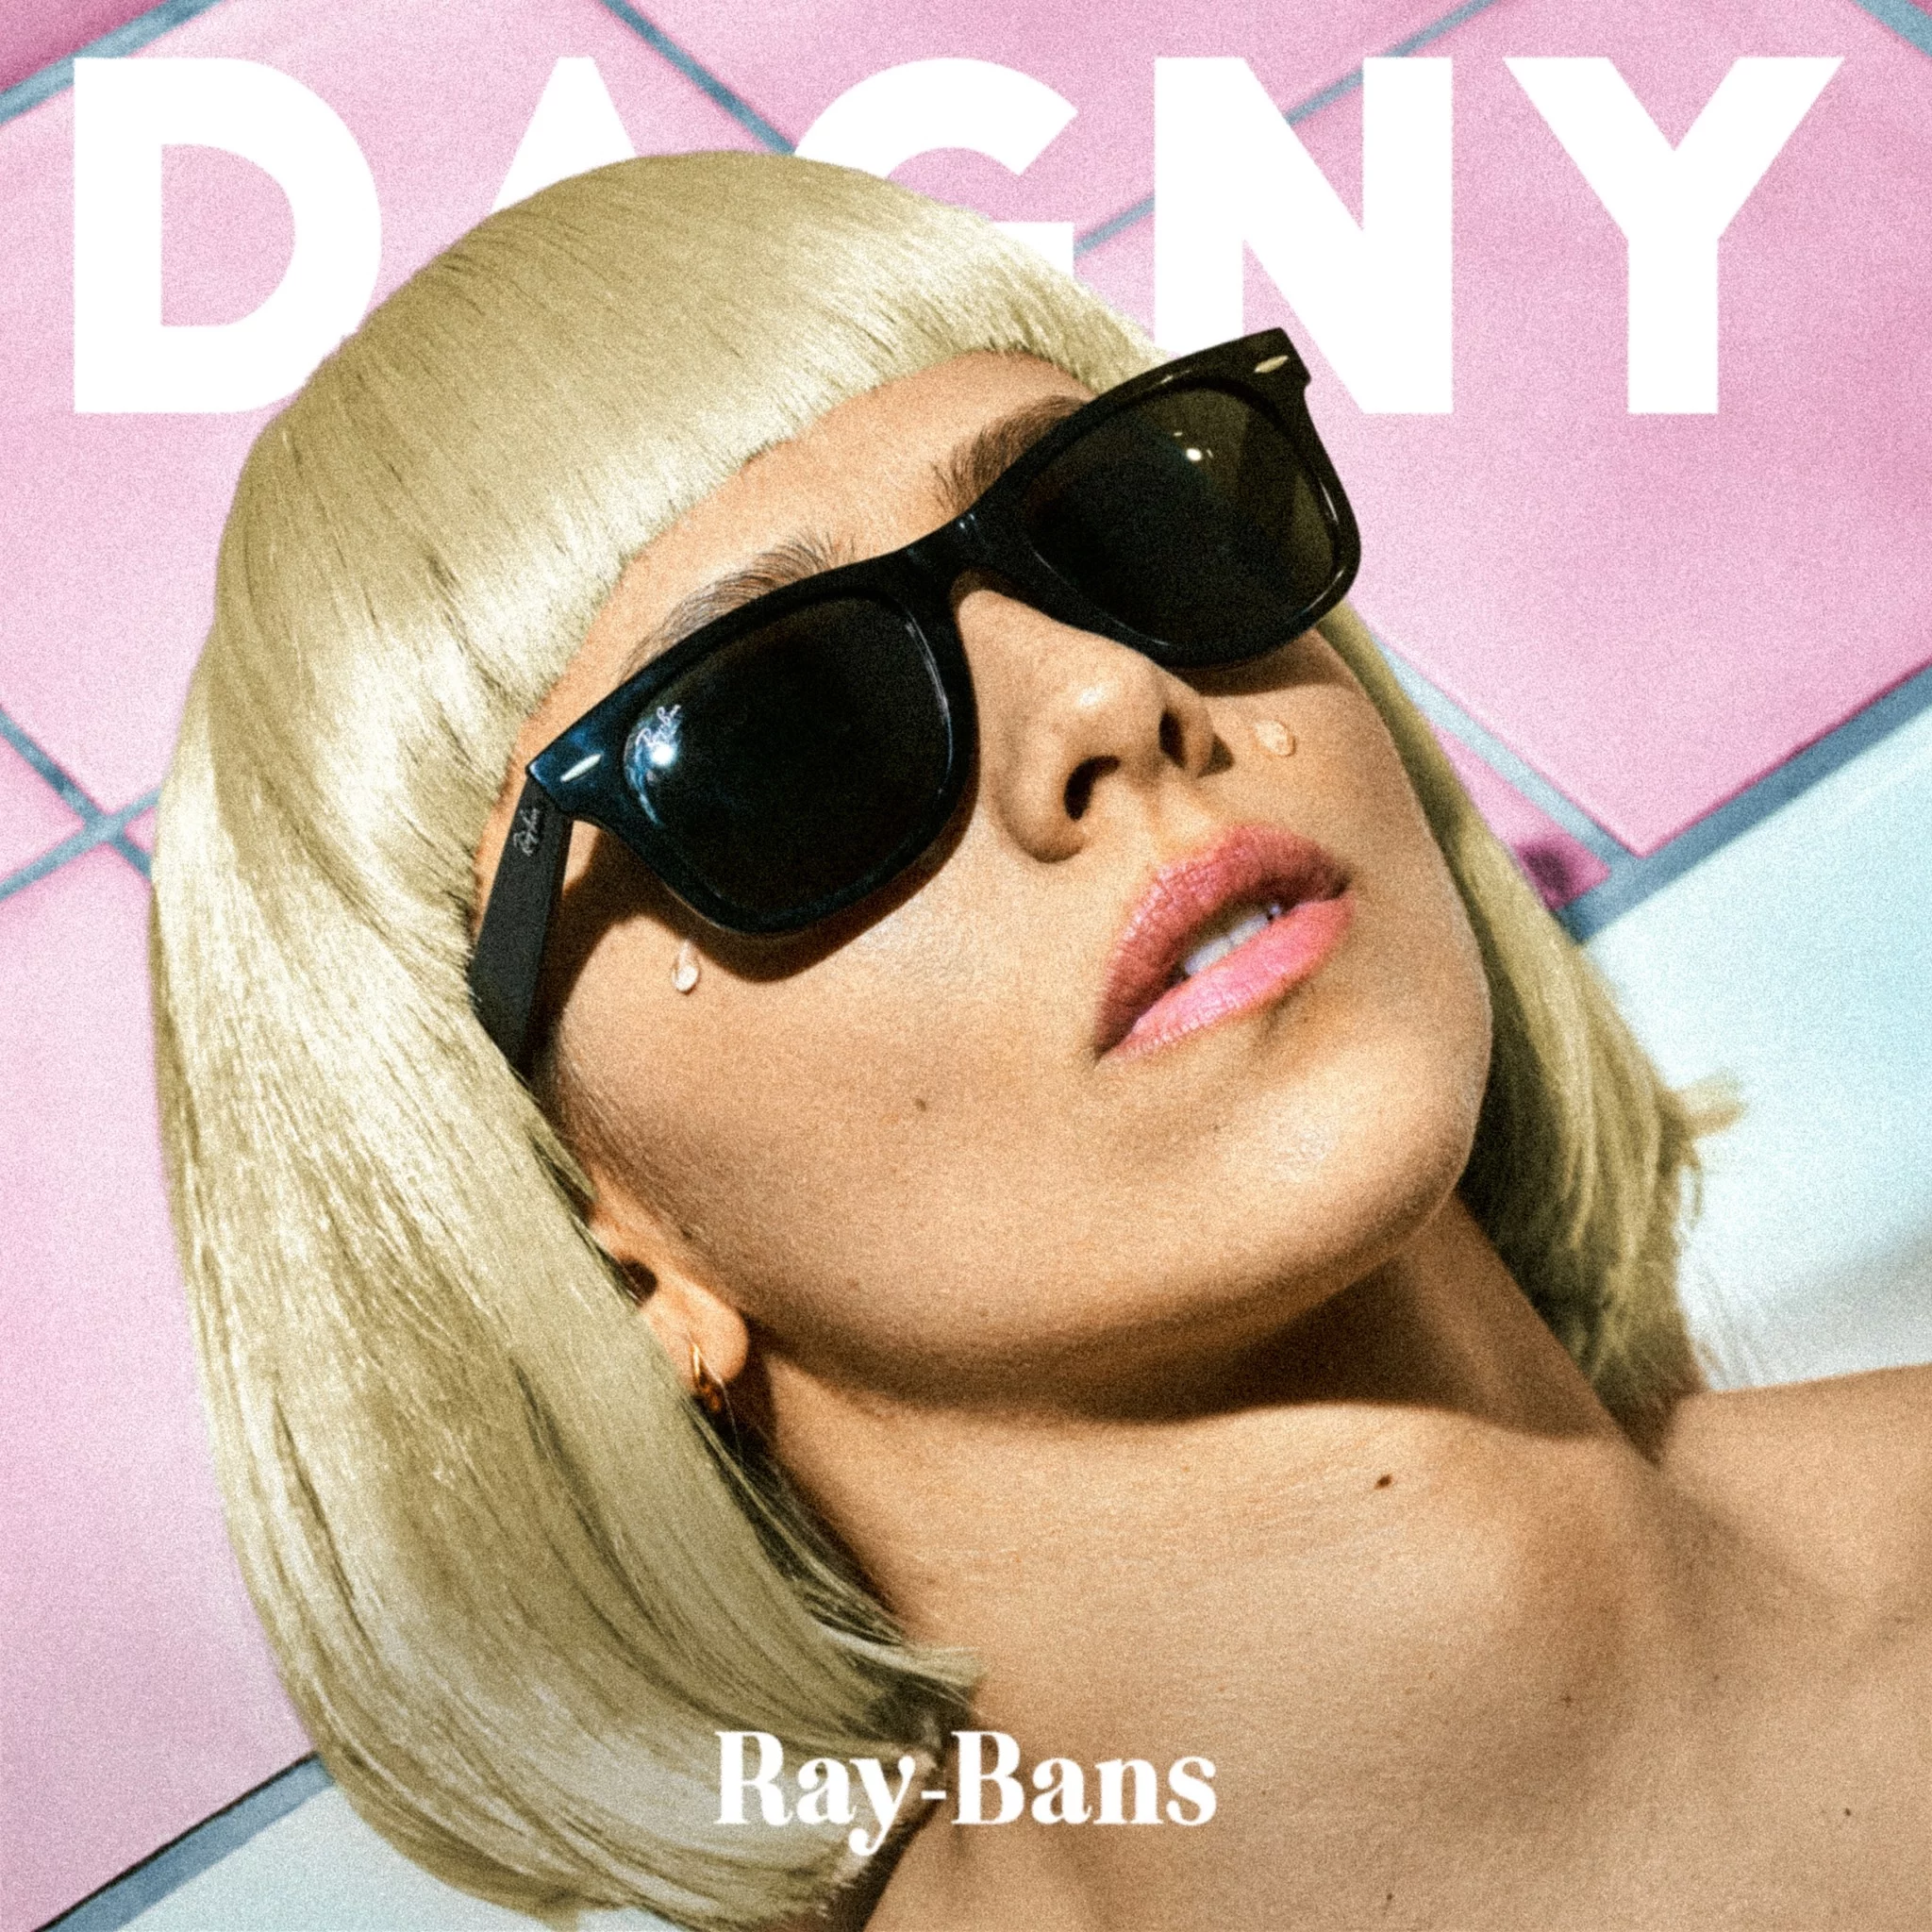 Dagny Ray-Bans cover artwork